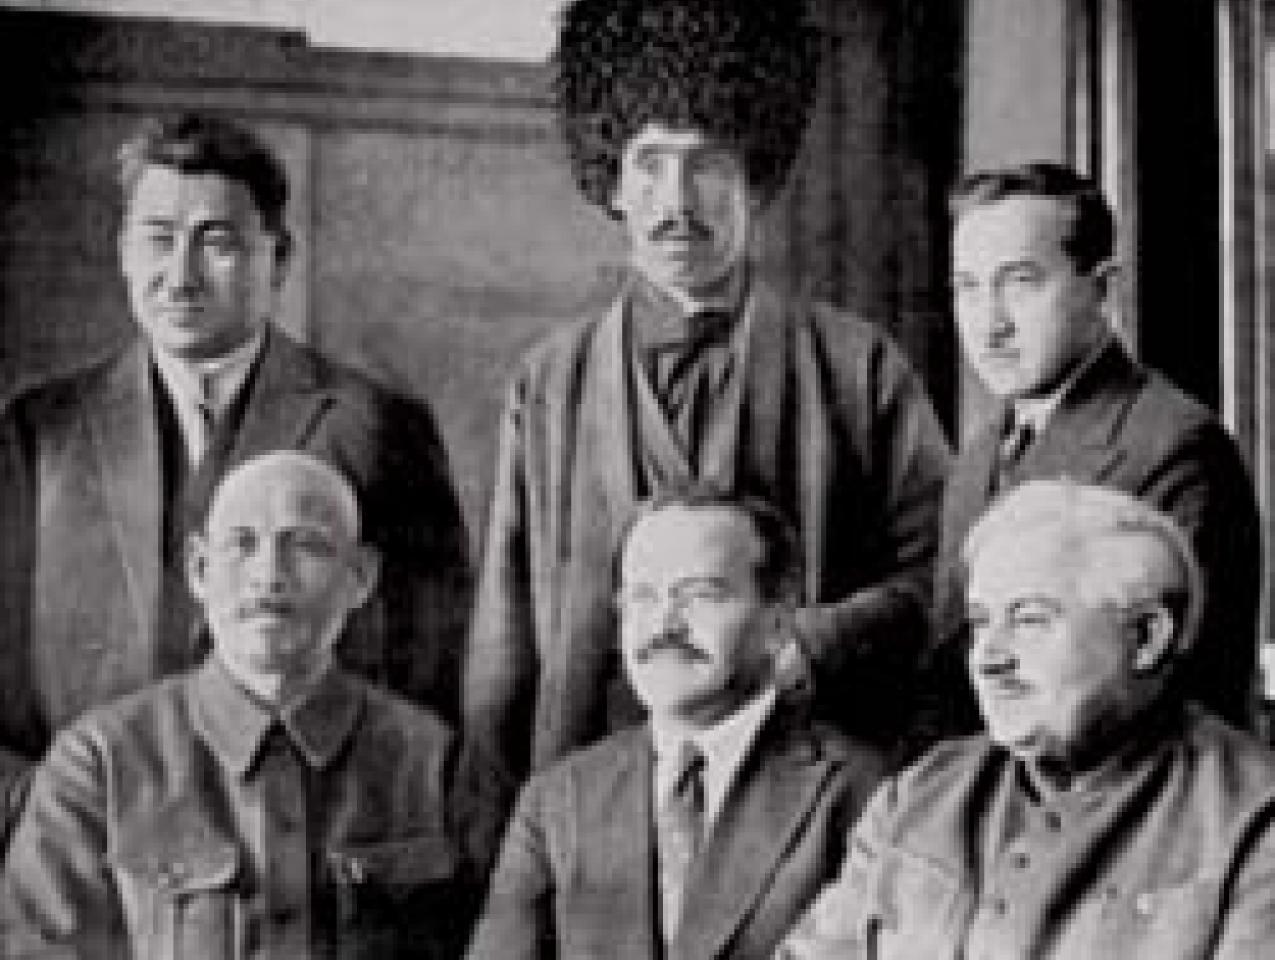 Soviet premier Vyacheslav Molotov and Uzbek party leaders